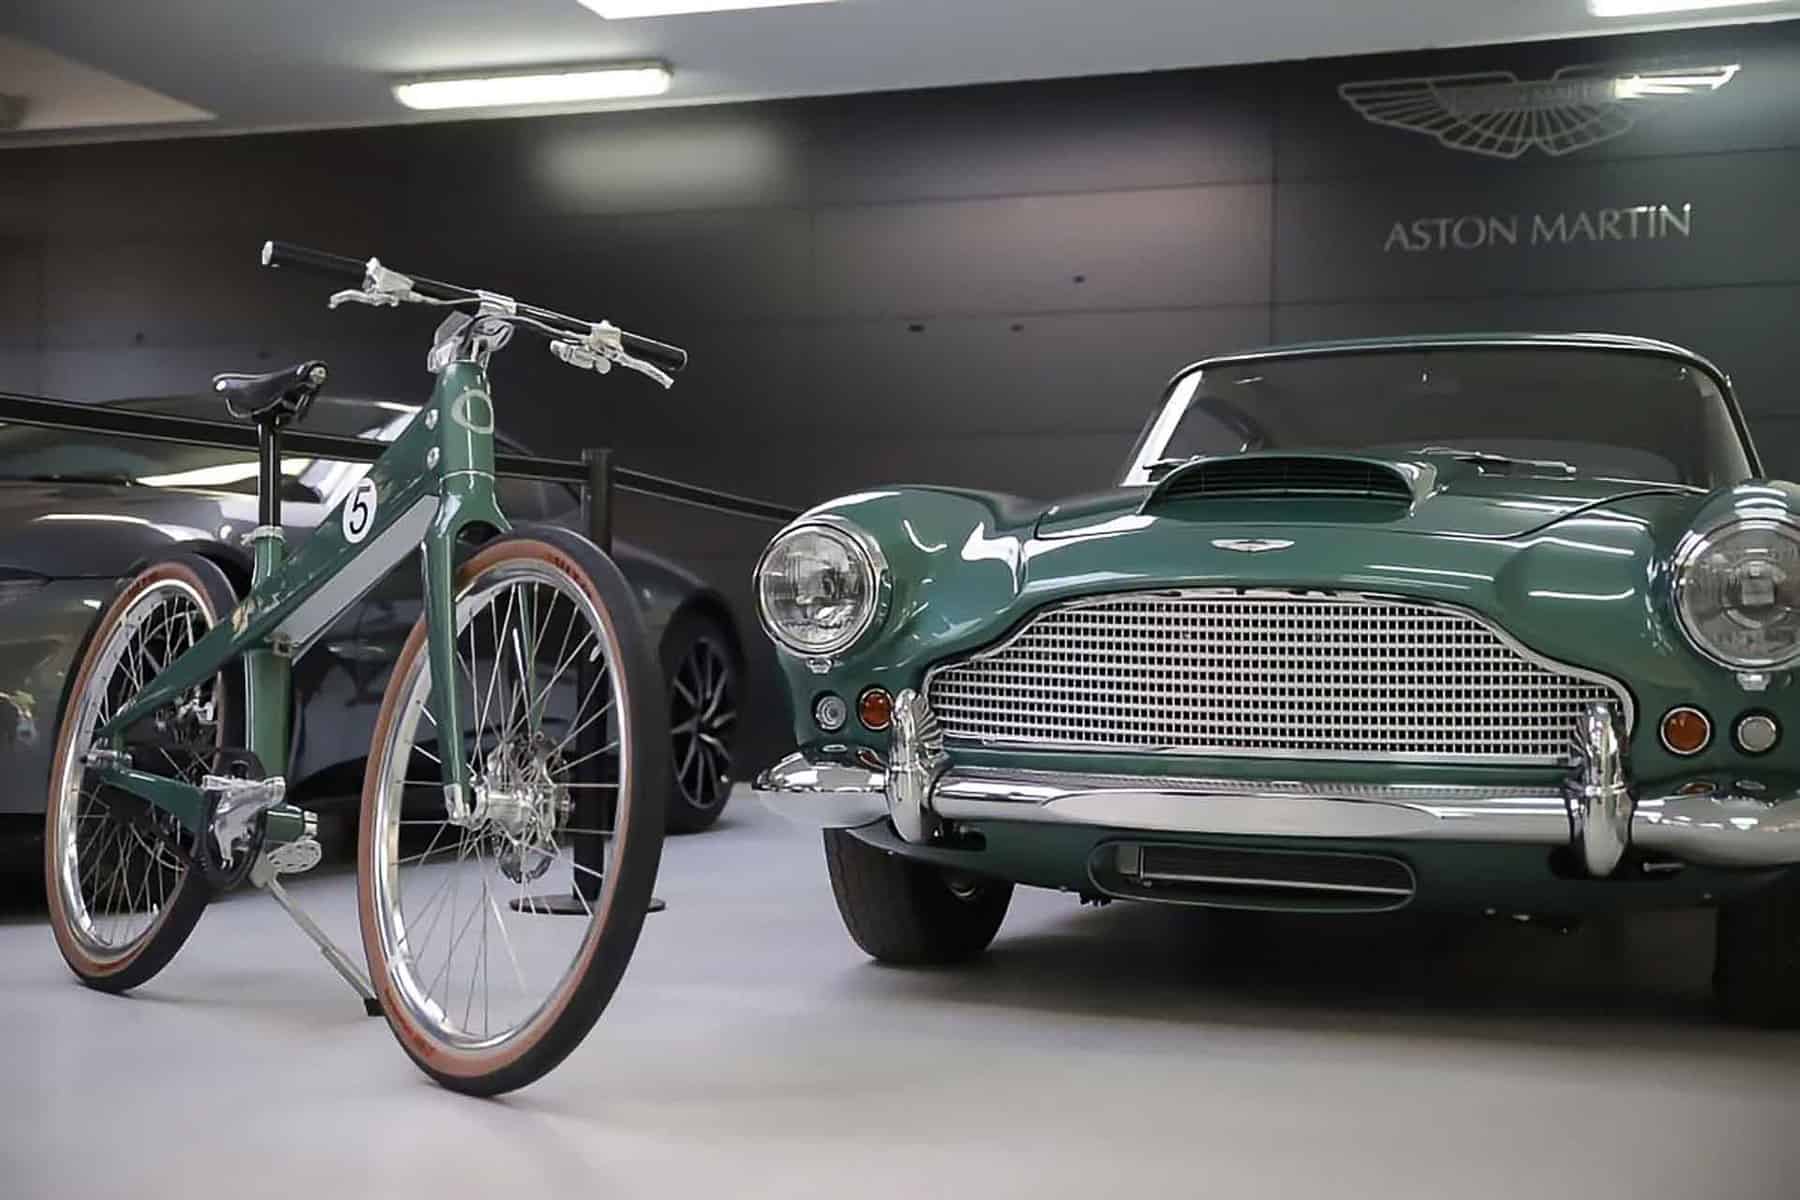 Coleen Aston Martin bike 1